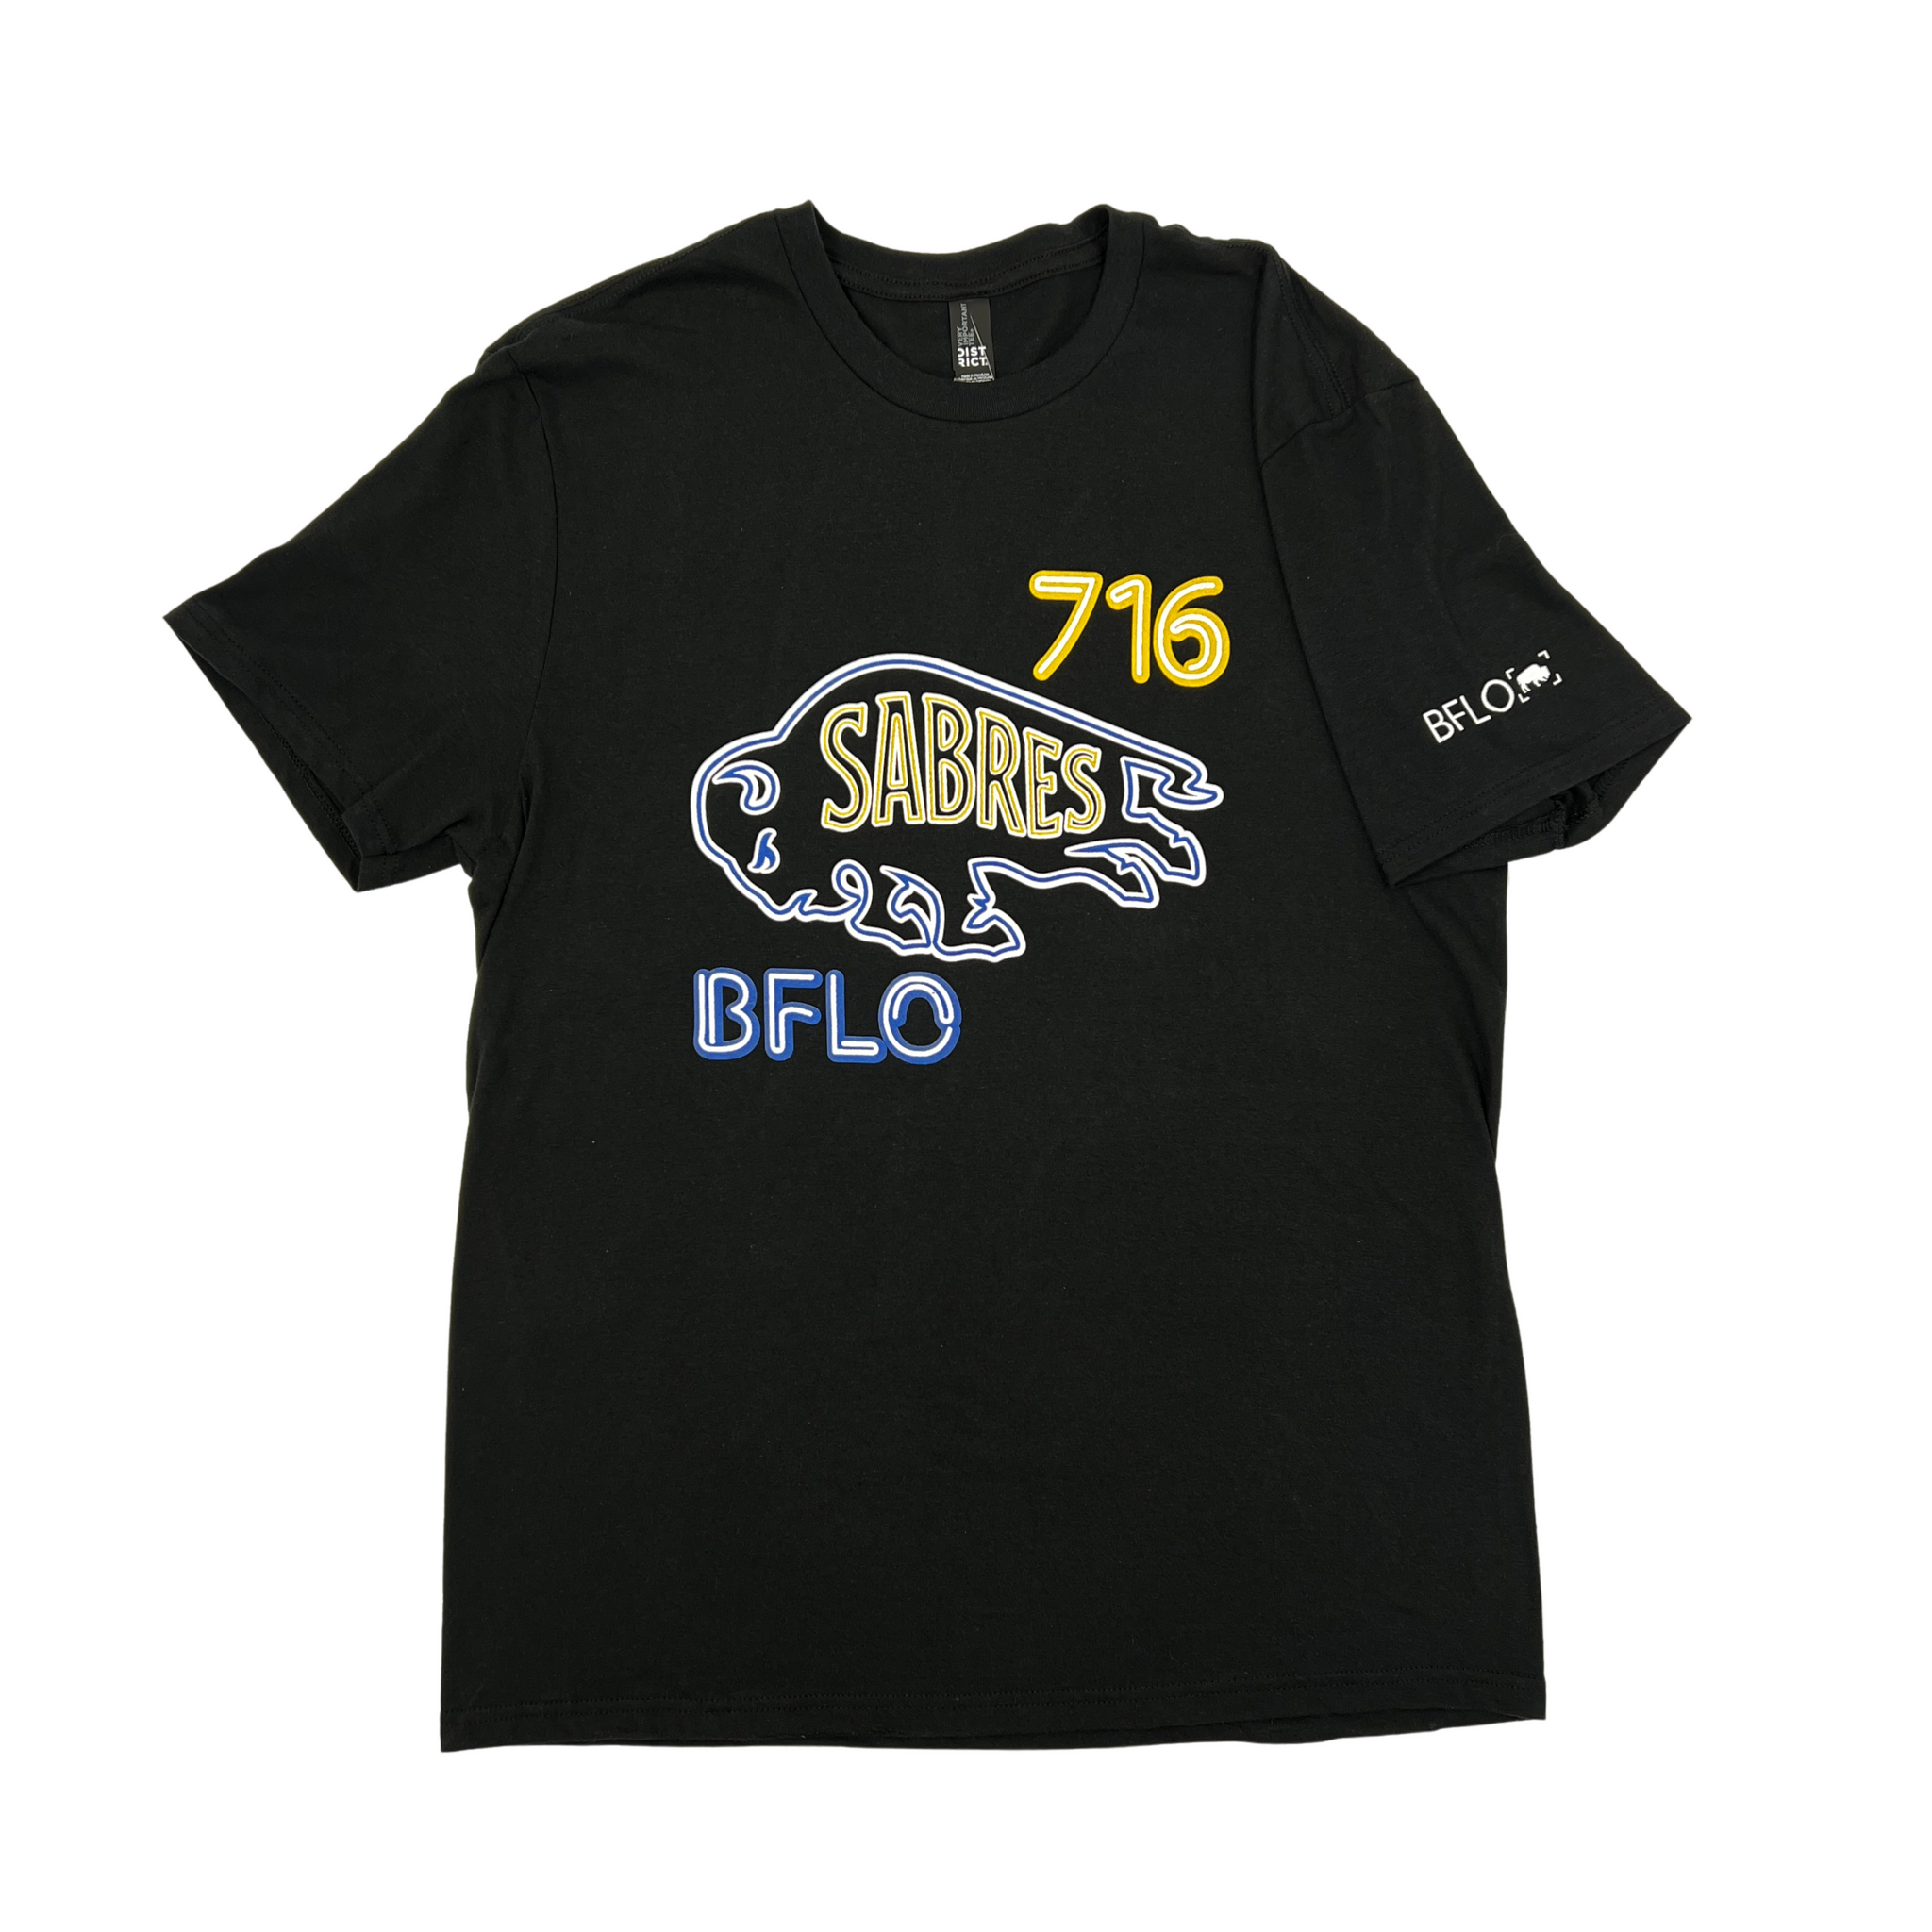 Buffalo Sabres x BFLO Neon Glow Short Sleeve Shirt